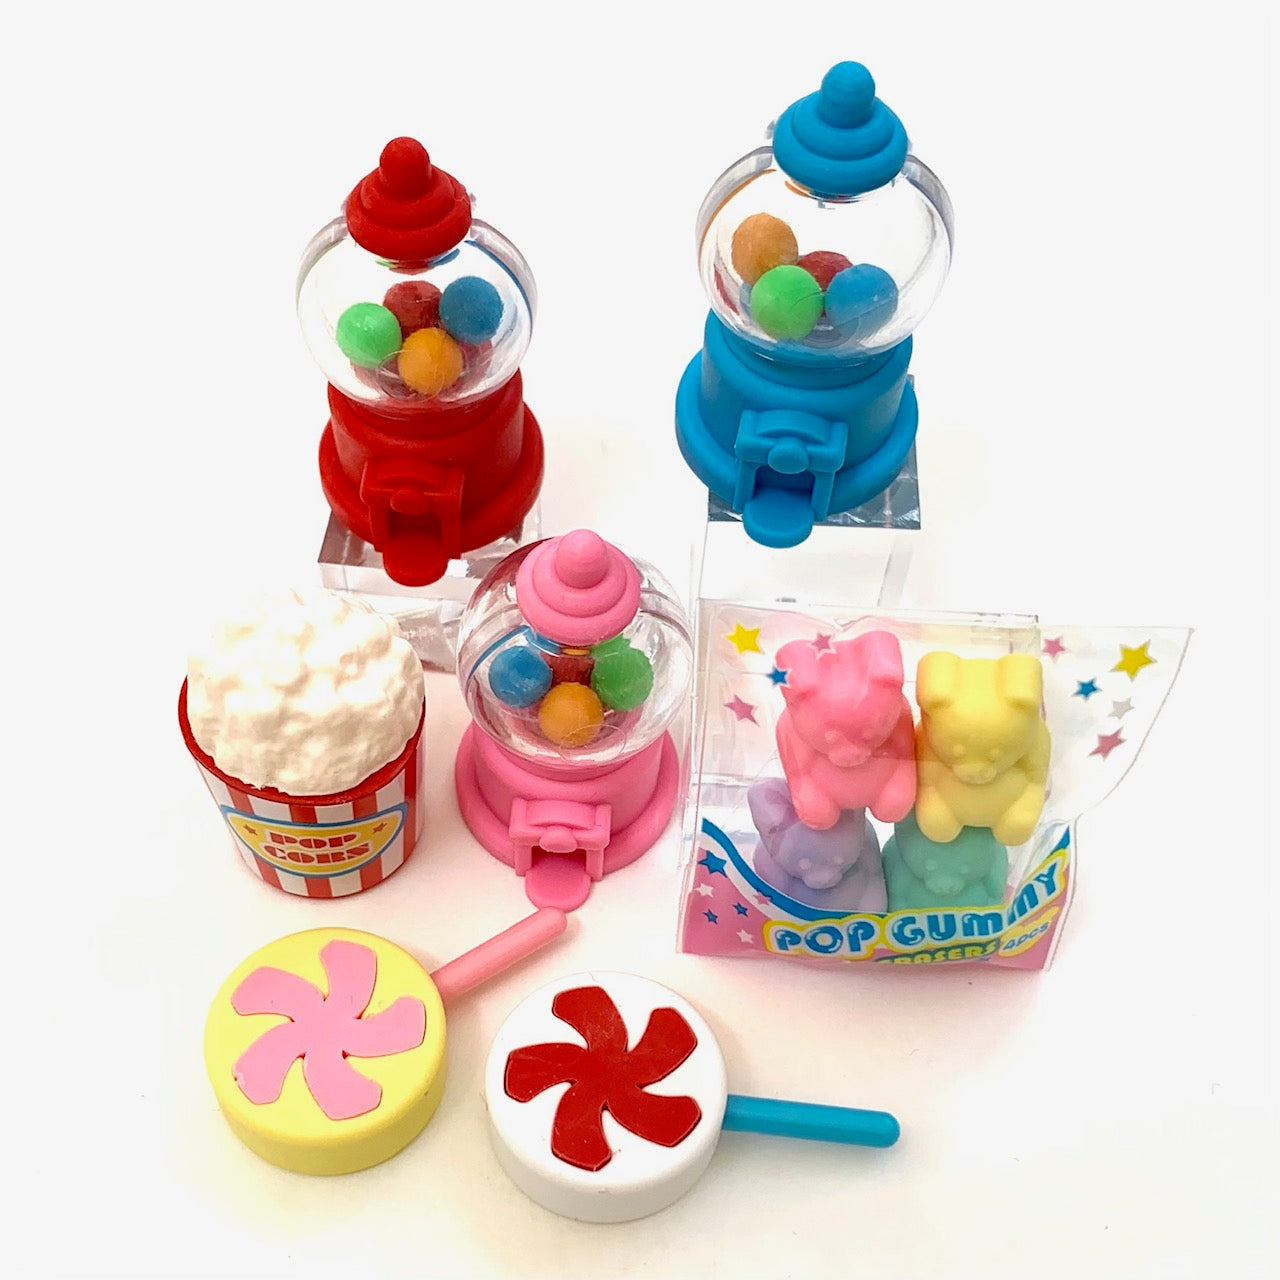 38010 IWAKO Candy Sweets Erasers-60